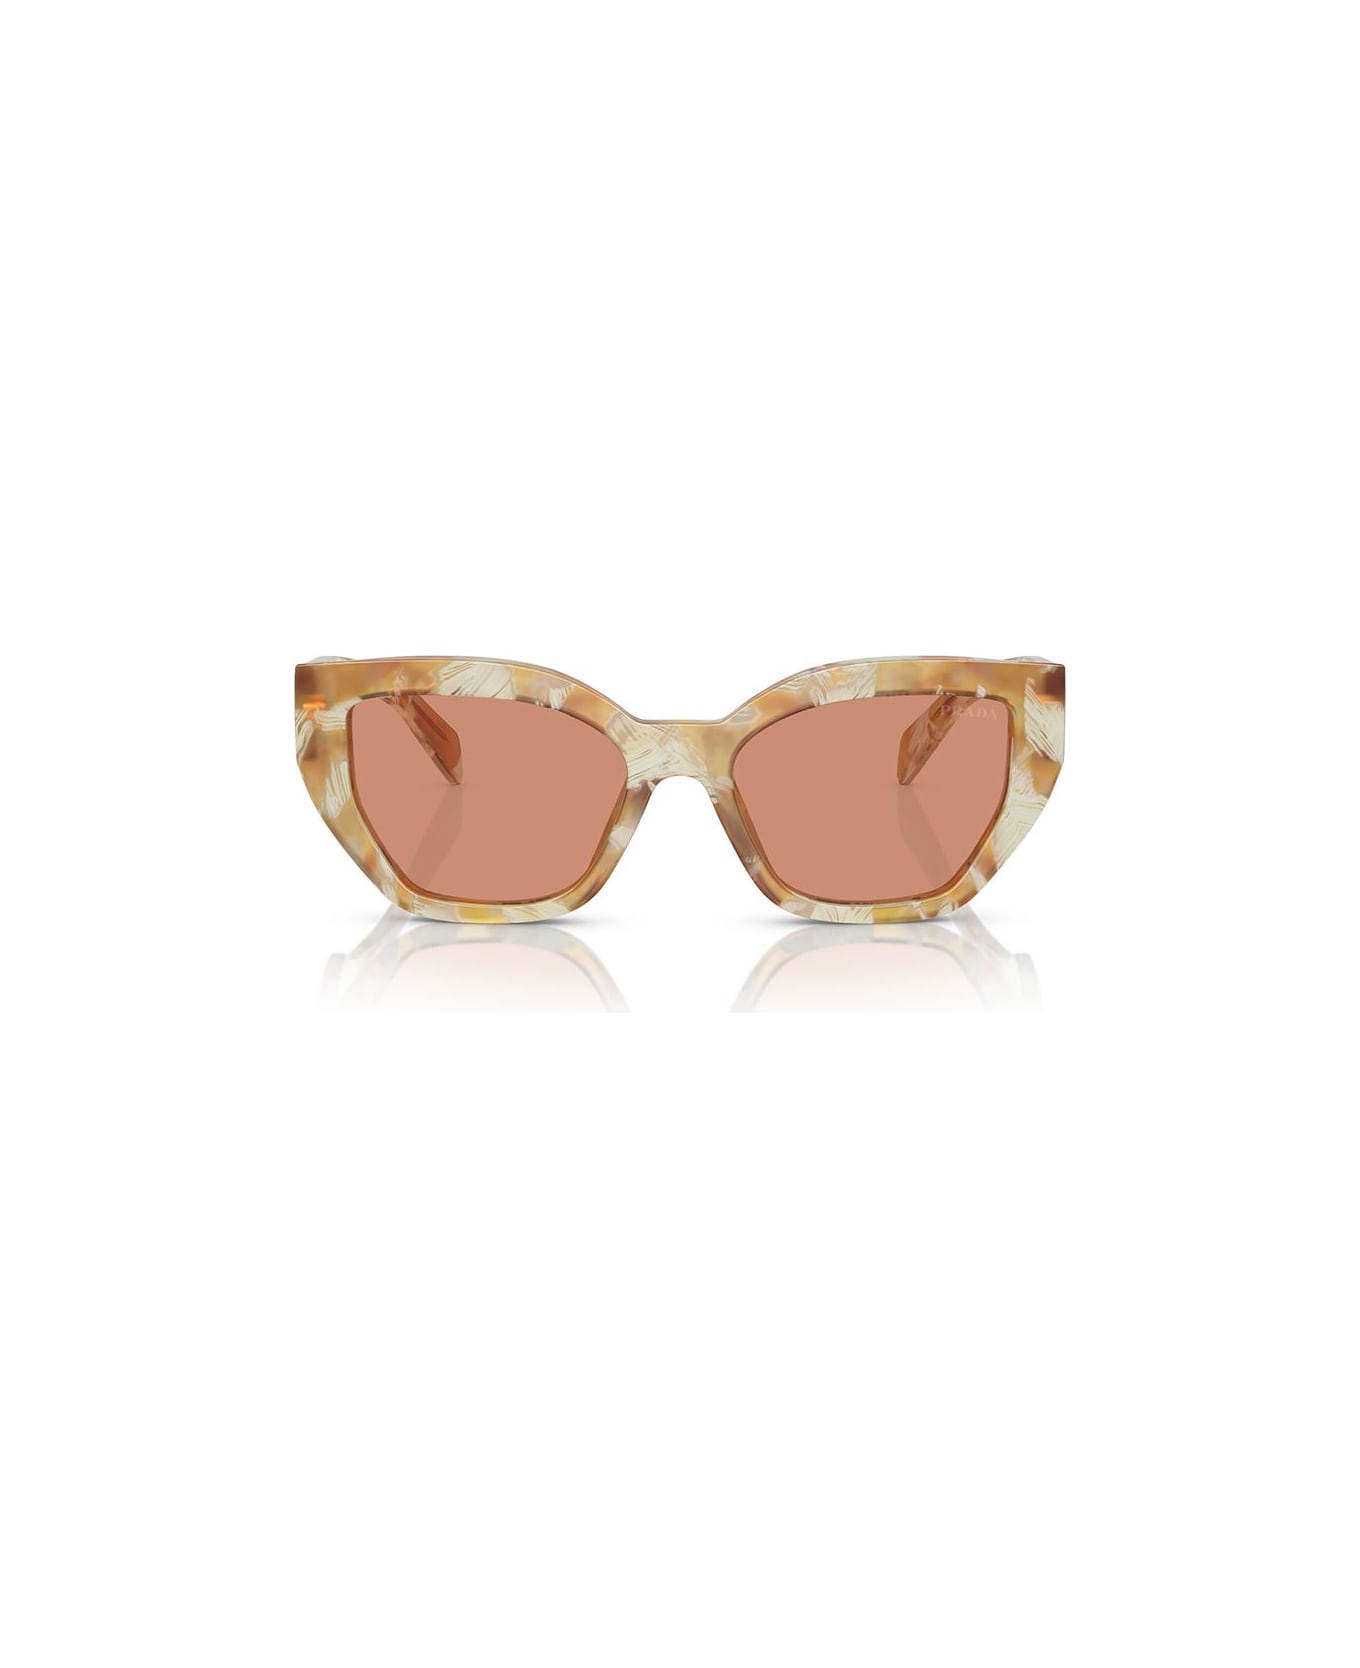 Prada Eyewear Sunglasses - 19N20D